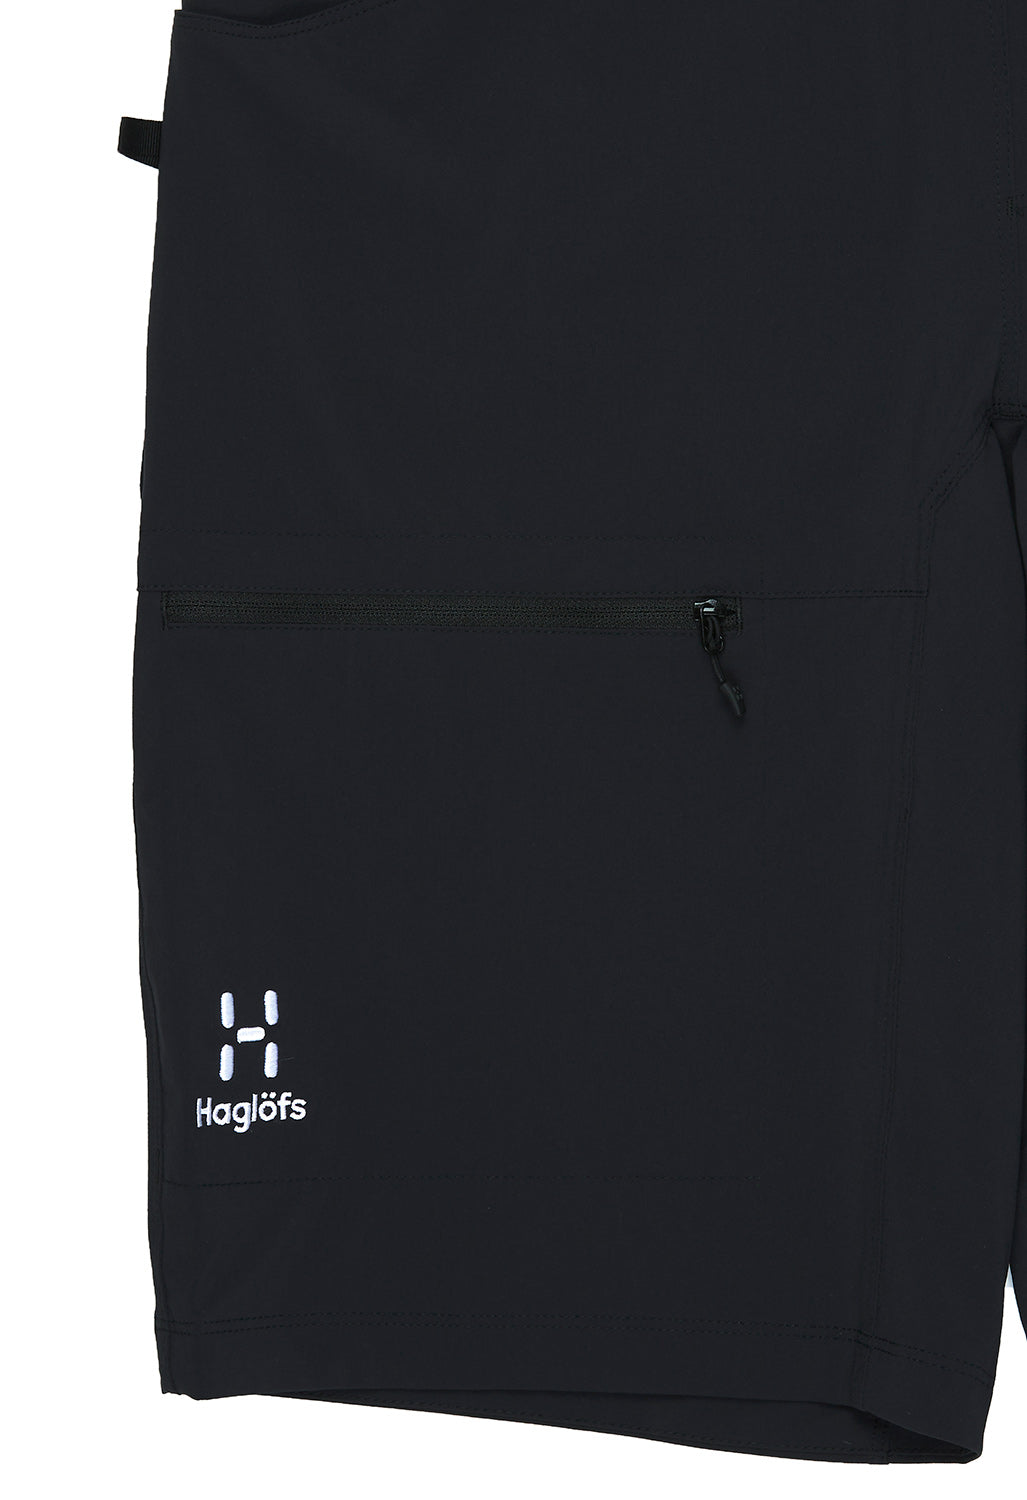 Haglofs Men's Roc Lite Standard Shorts - True Black